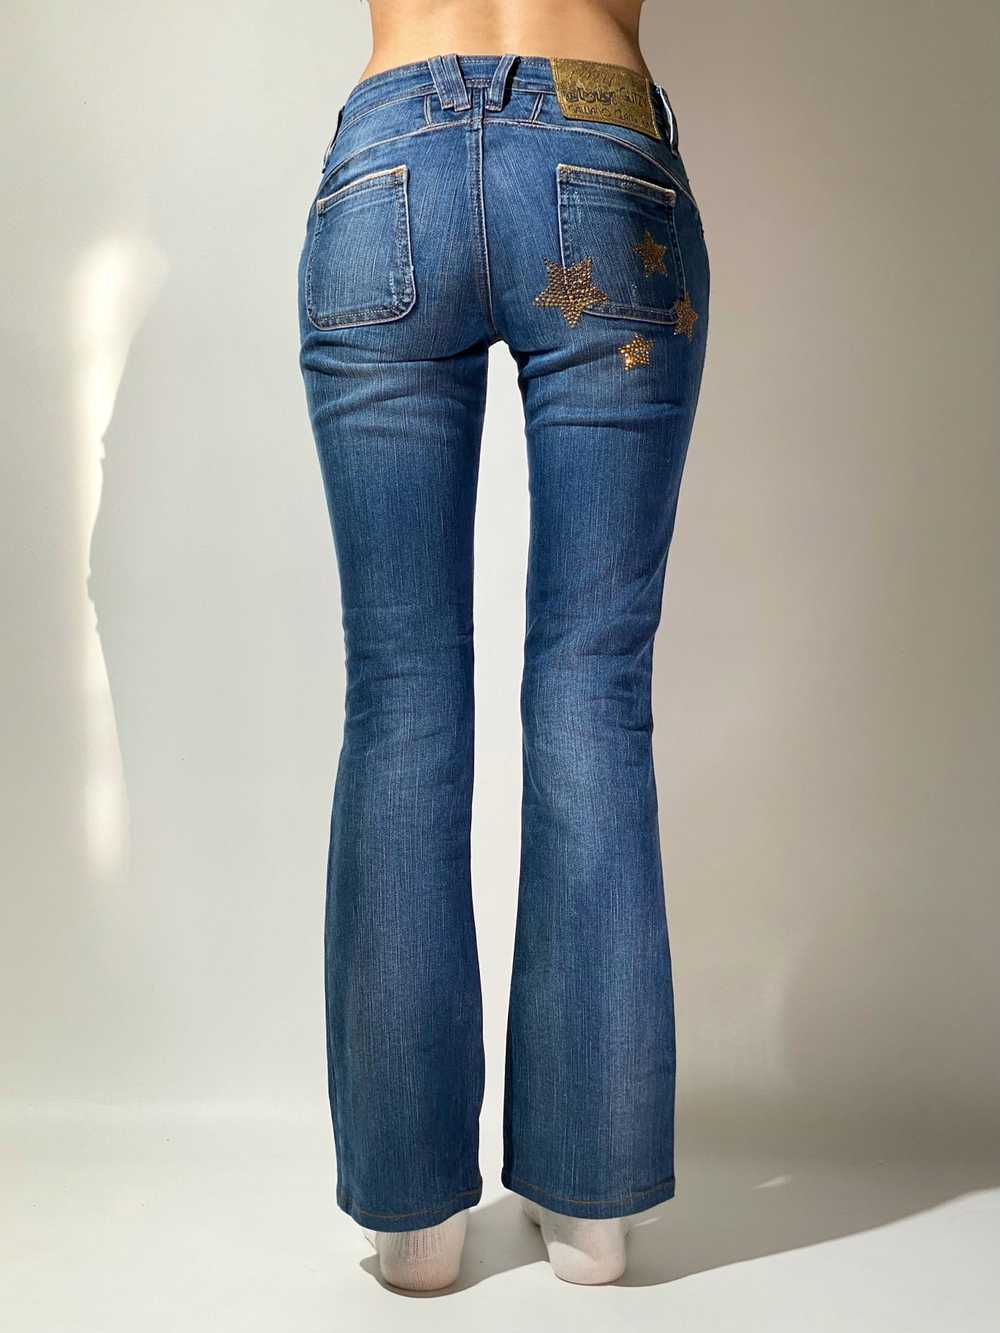 John Galliano John Galliano vintage blue jeans - image 1